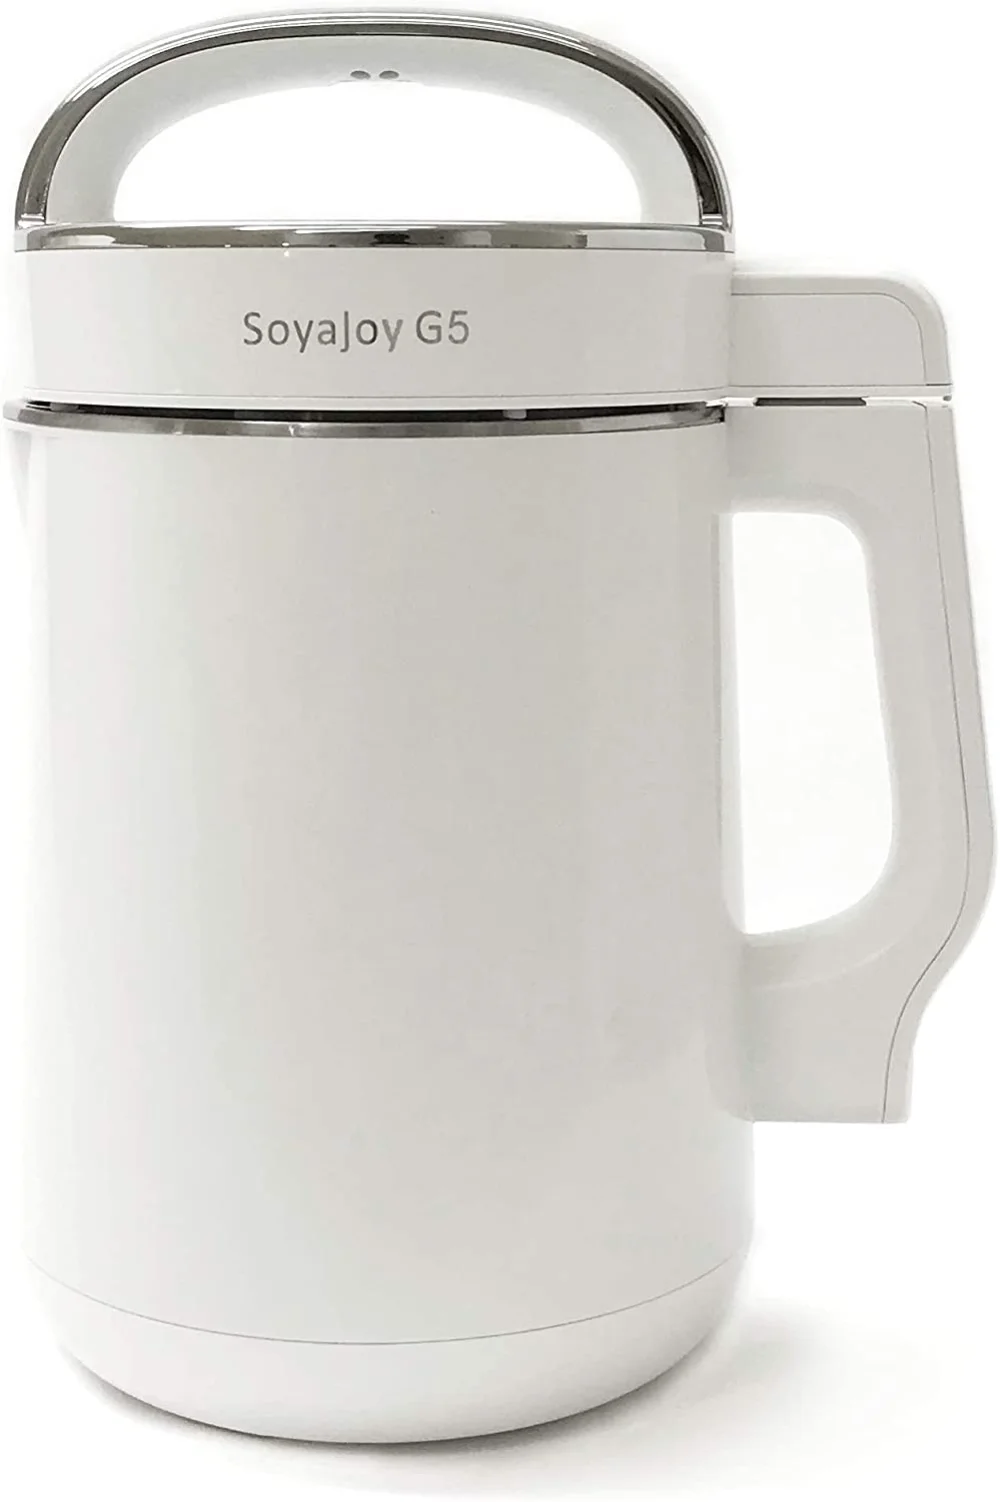 SoyaJoy G5 Soy Milk Maker & Soup Maker 2020 new Model (1.6 L)，Food Processors，Kitchen Appliances